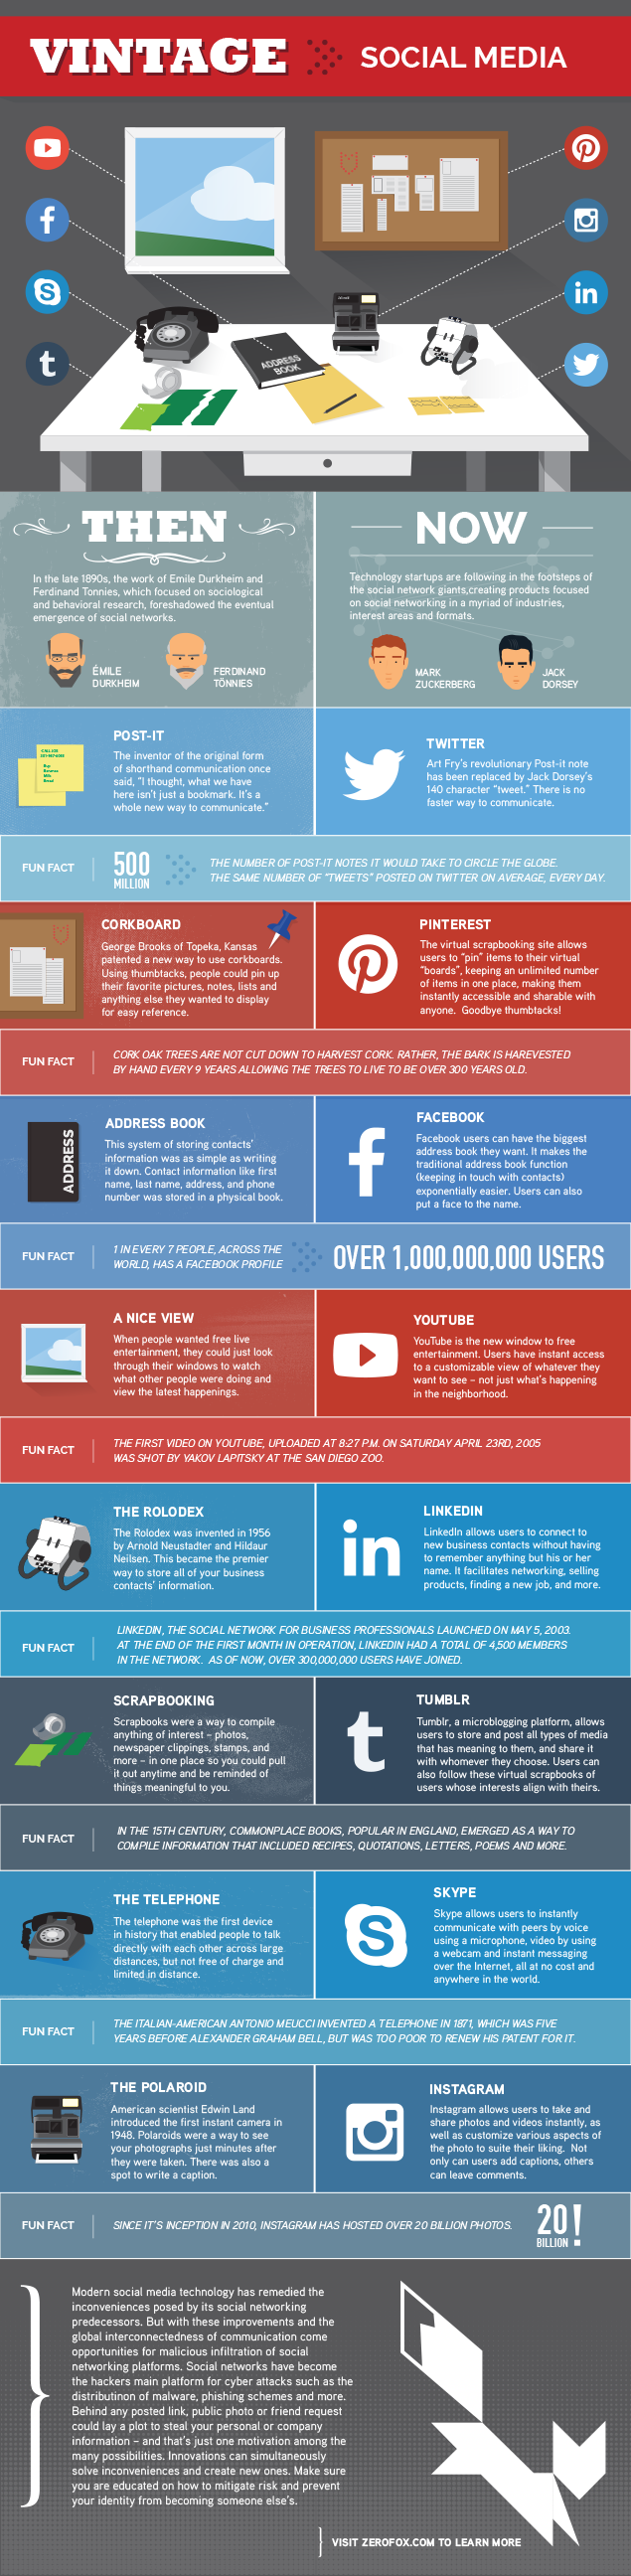  Social Media Now and Then - Vintage Twitter, Pinterest, Facebook, YouTube, LinkedIn Instagram - #infographic